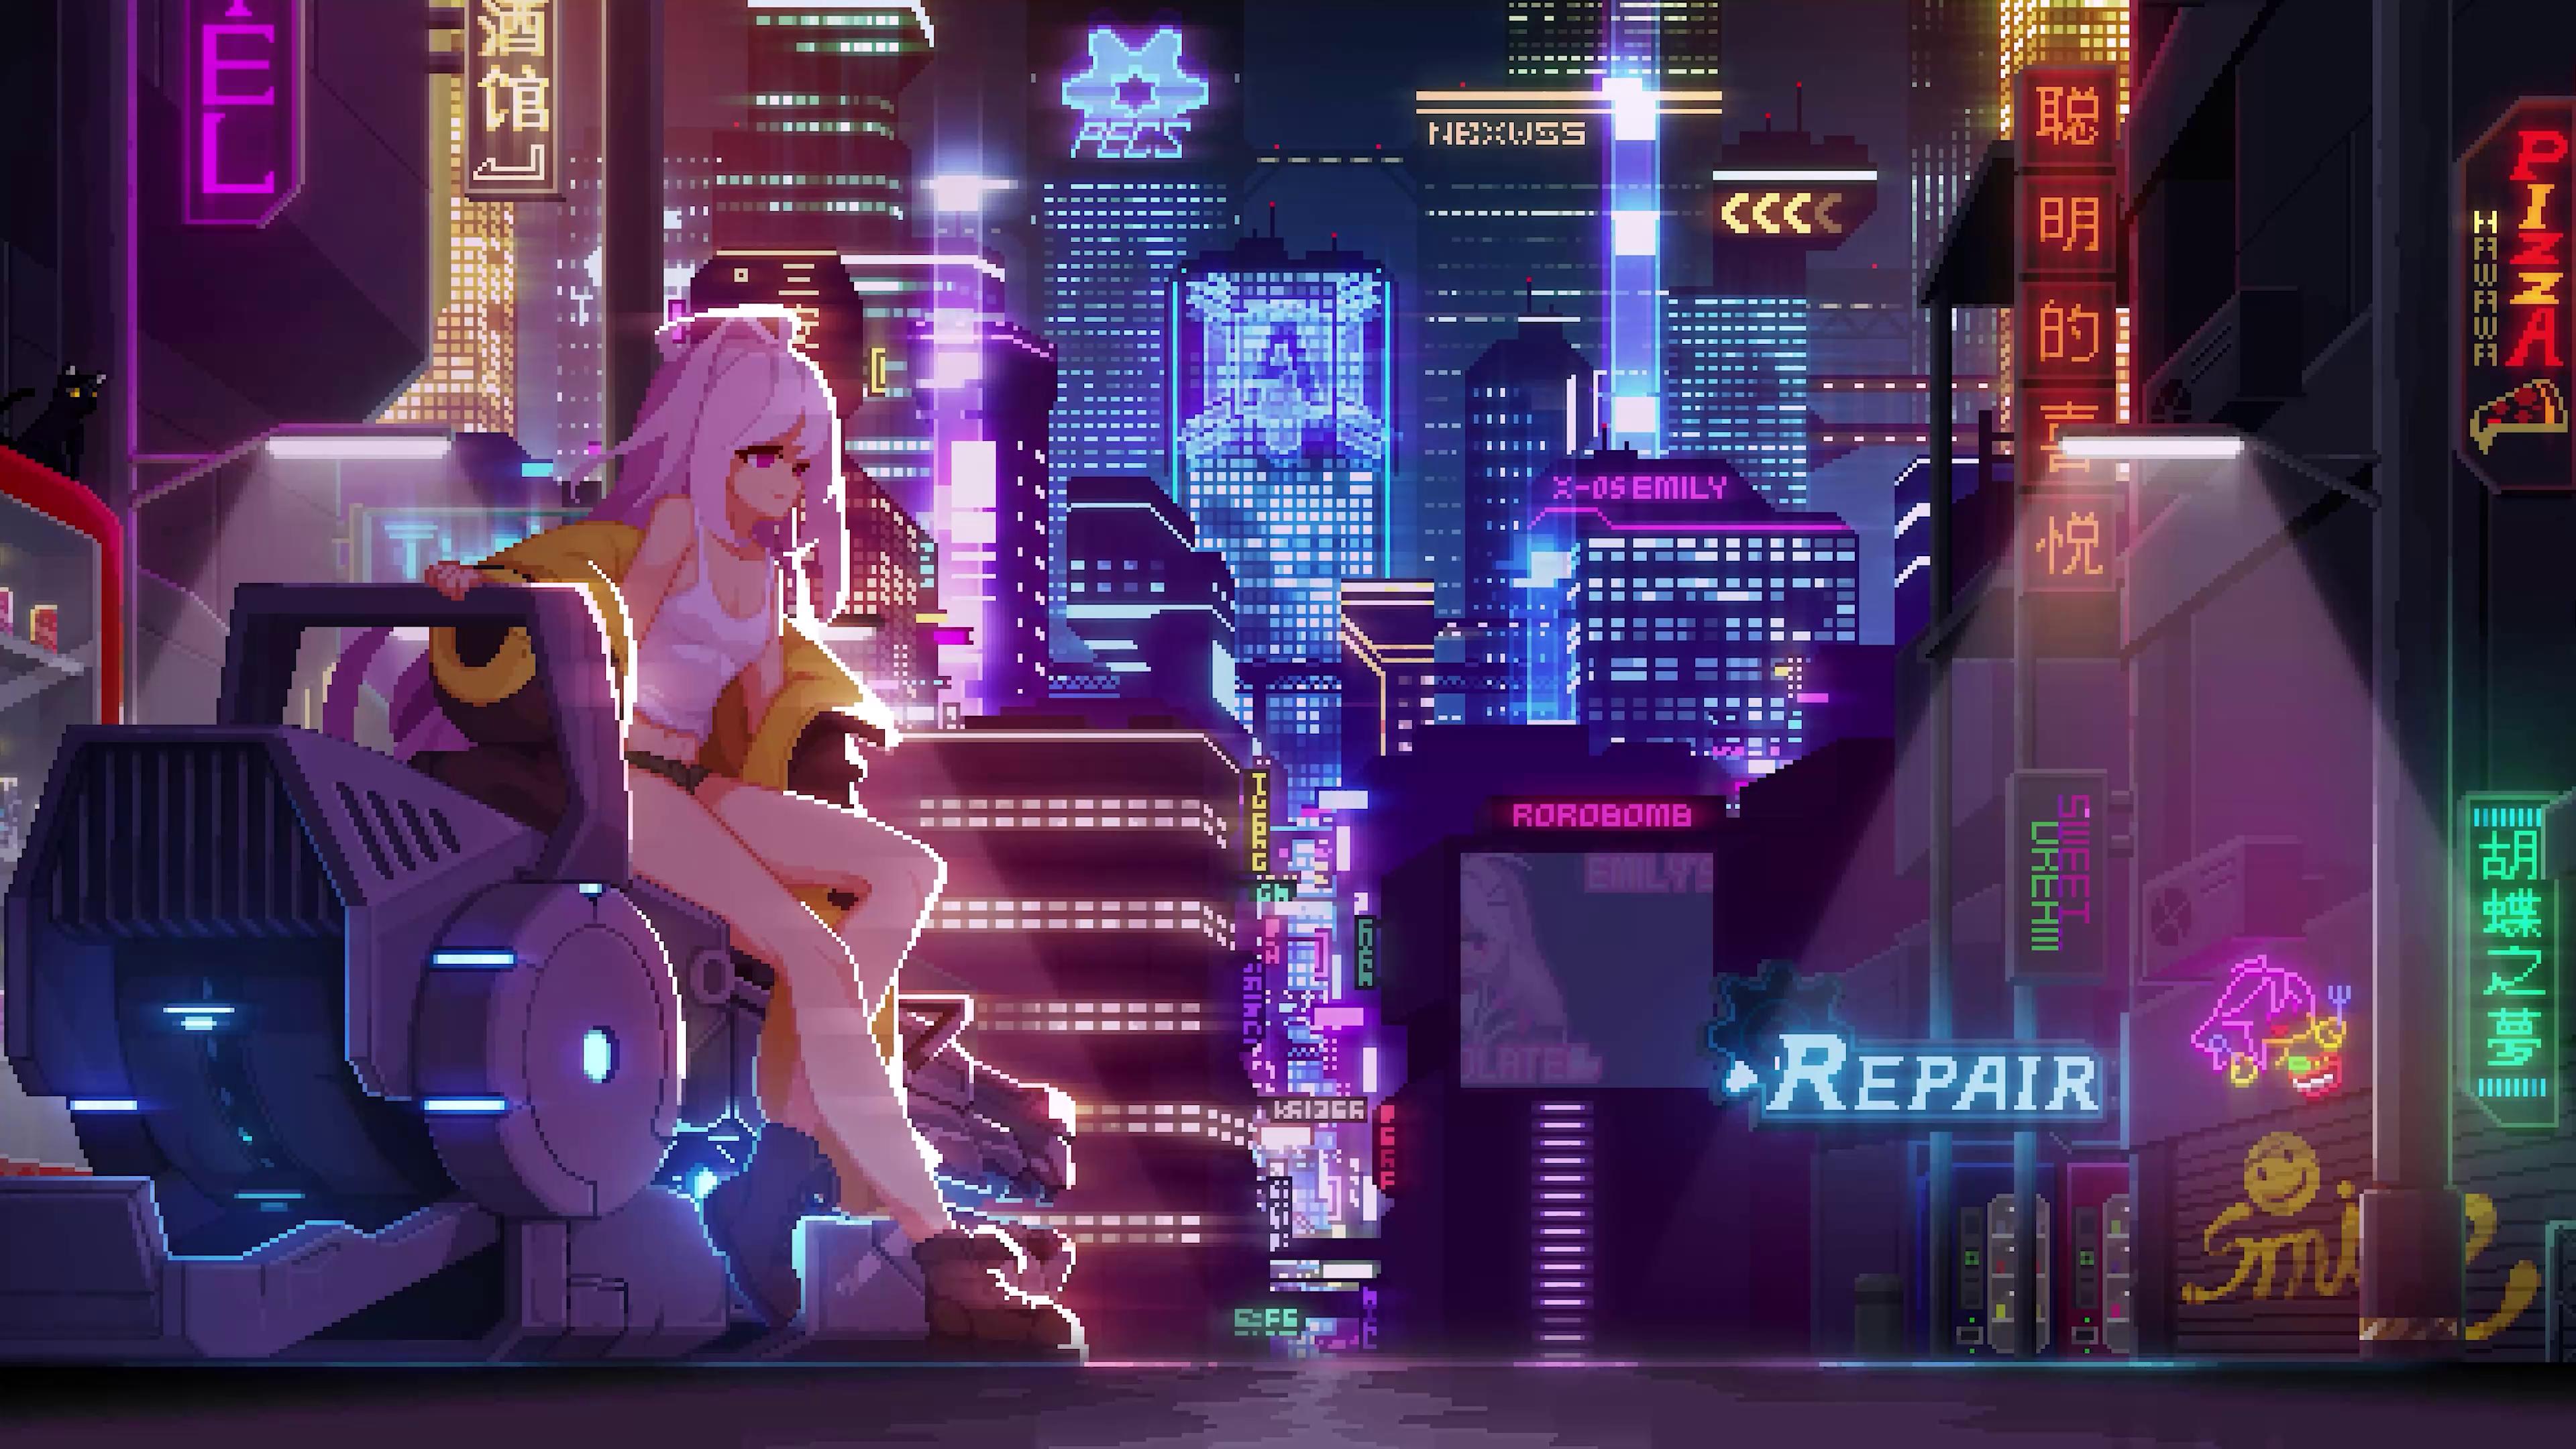 36+] Cyberpunk Anime Wallpapers - WallpaperSafari